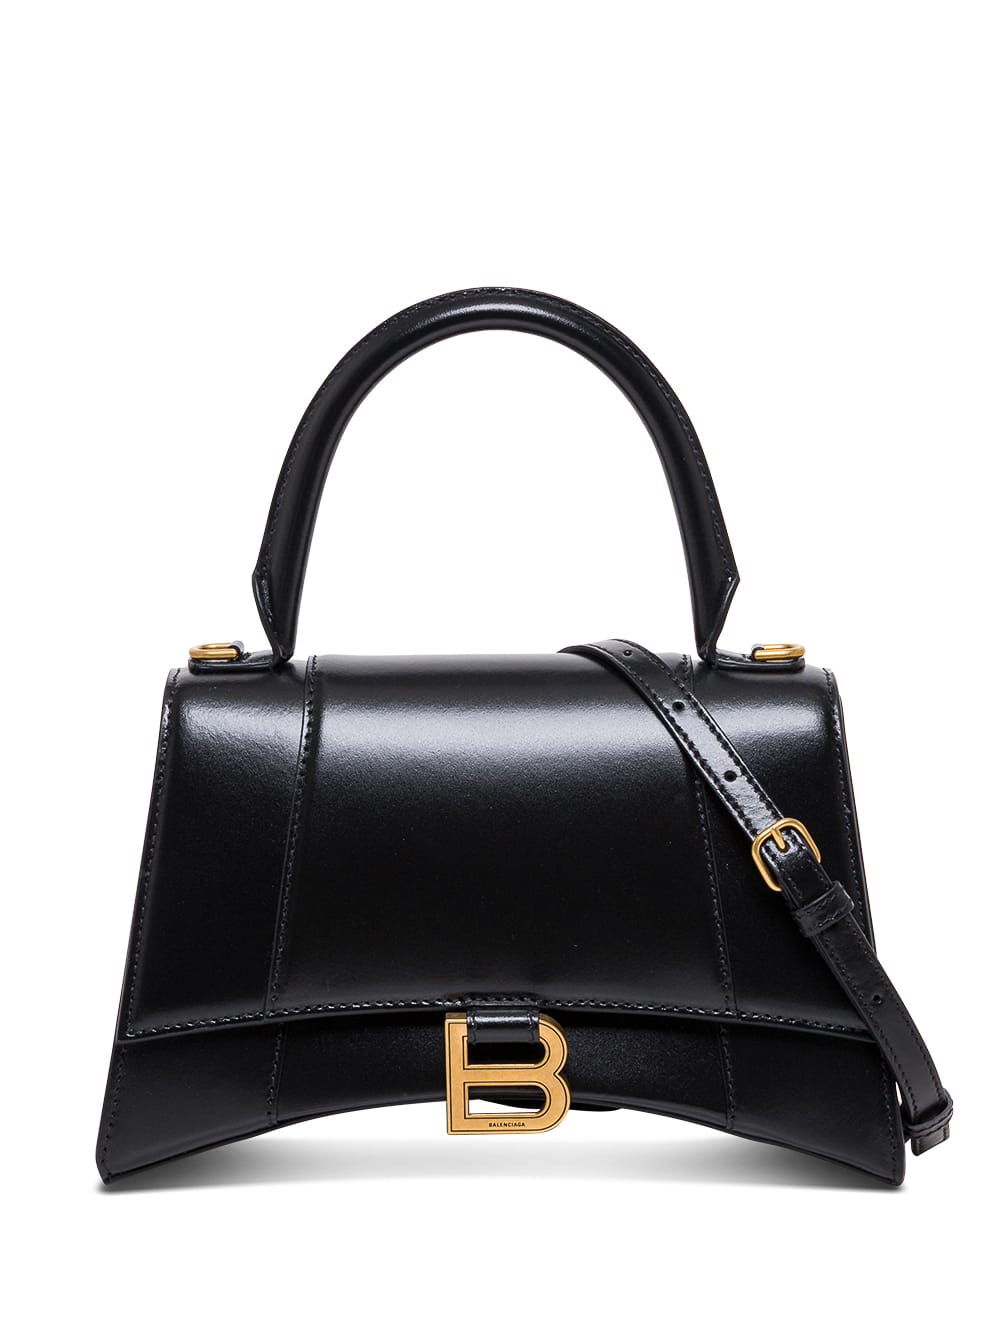 Balenciaga Hourglass Handbag In Black Leather